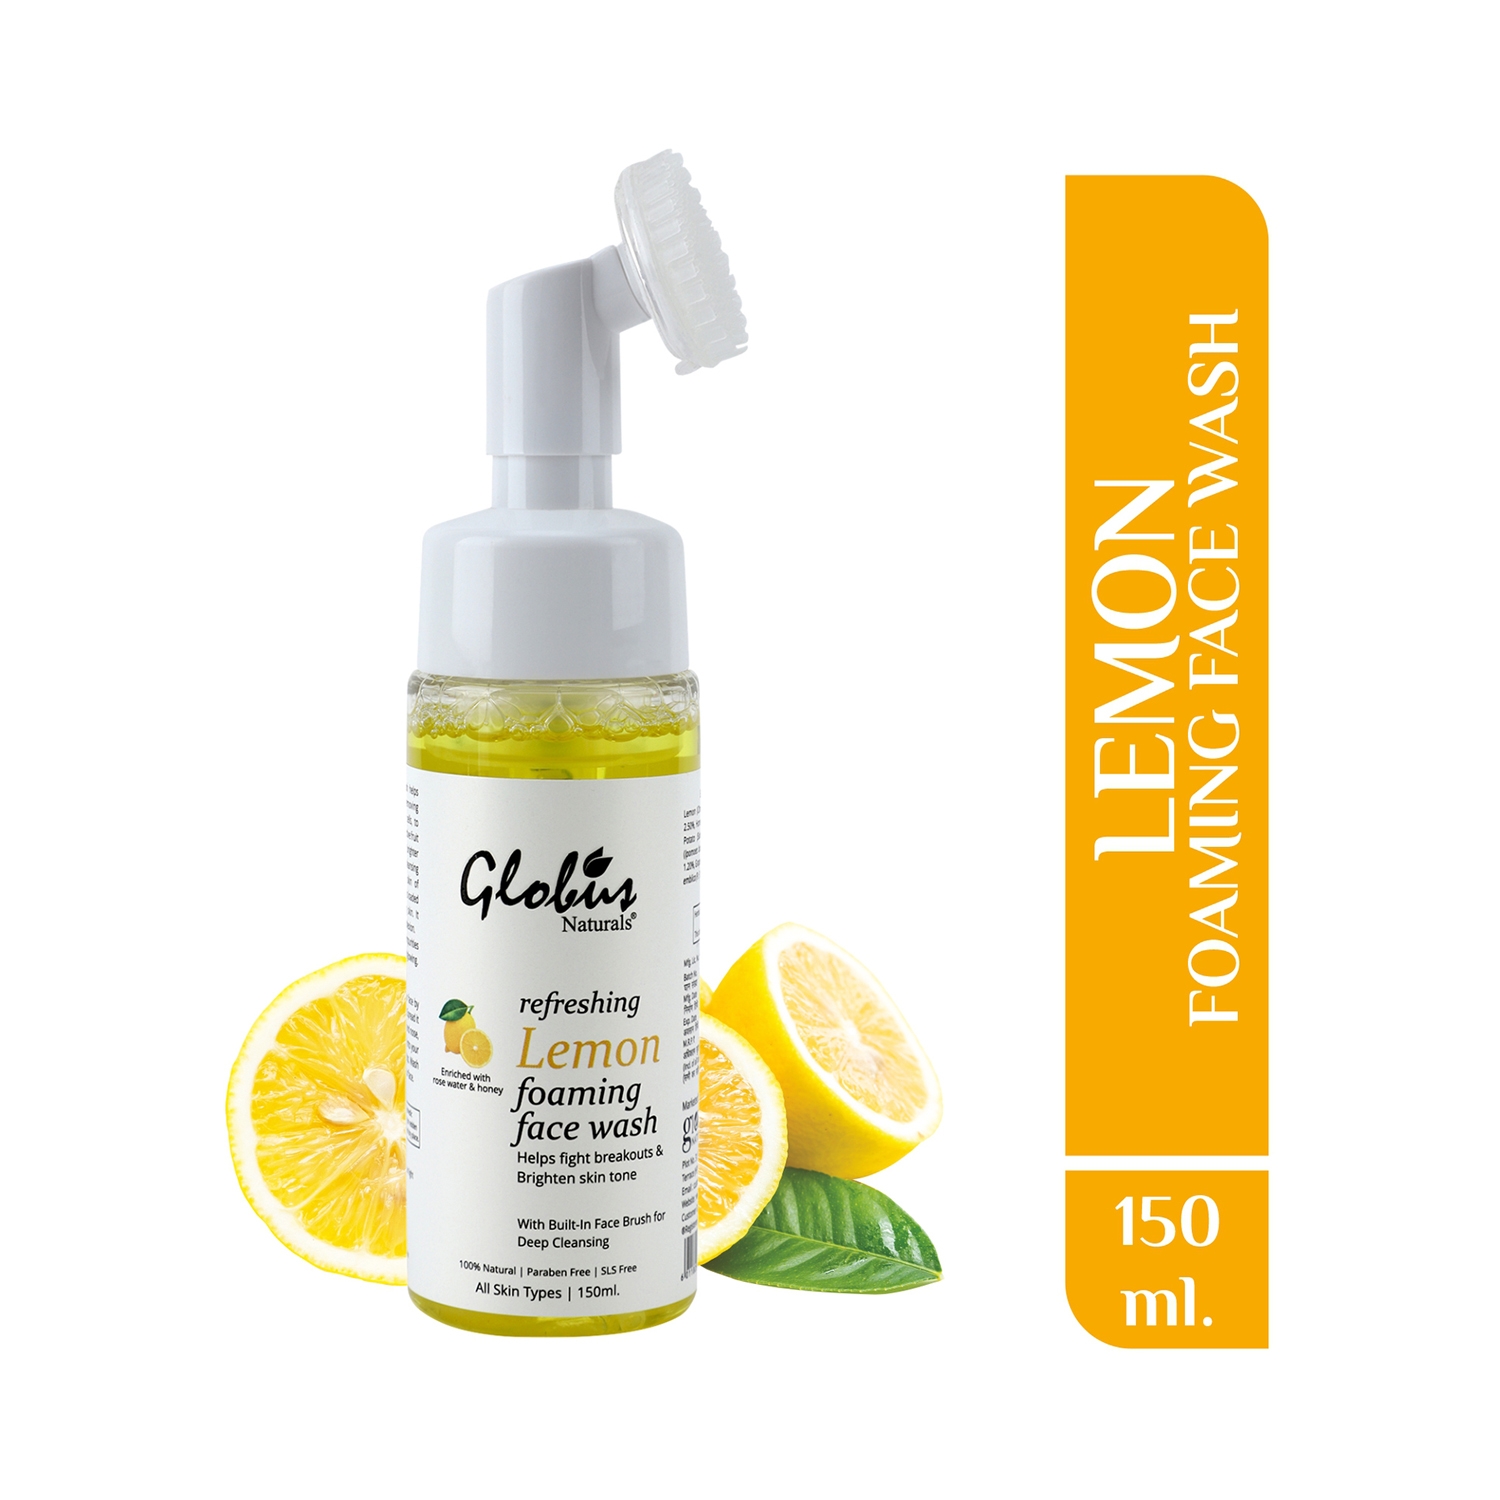 Globus Naturals | Globus Naturals Refreshing Lemon Foaming Face Wash With Silicone Face Massage Brush (150ml)